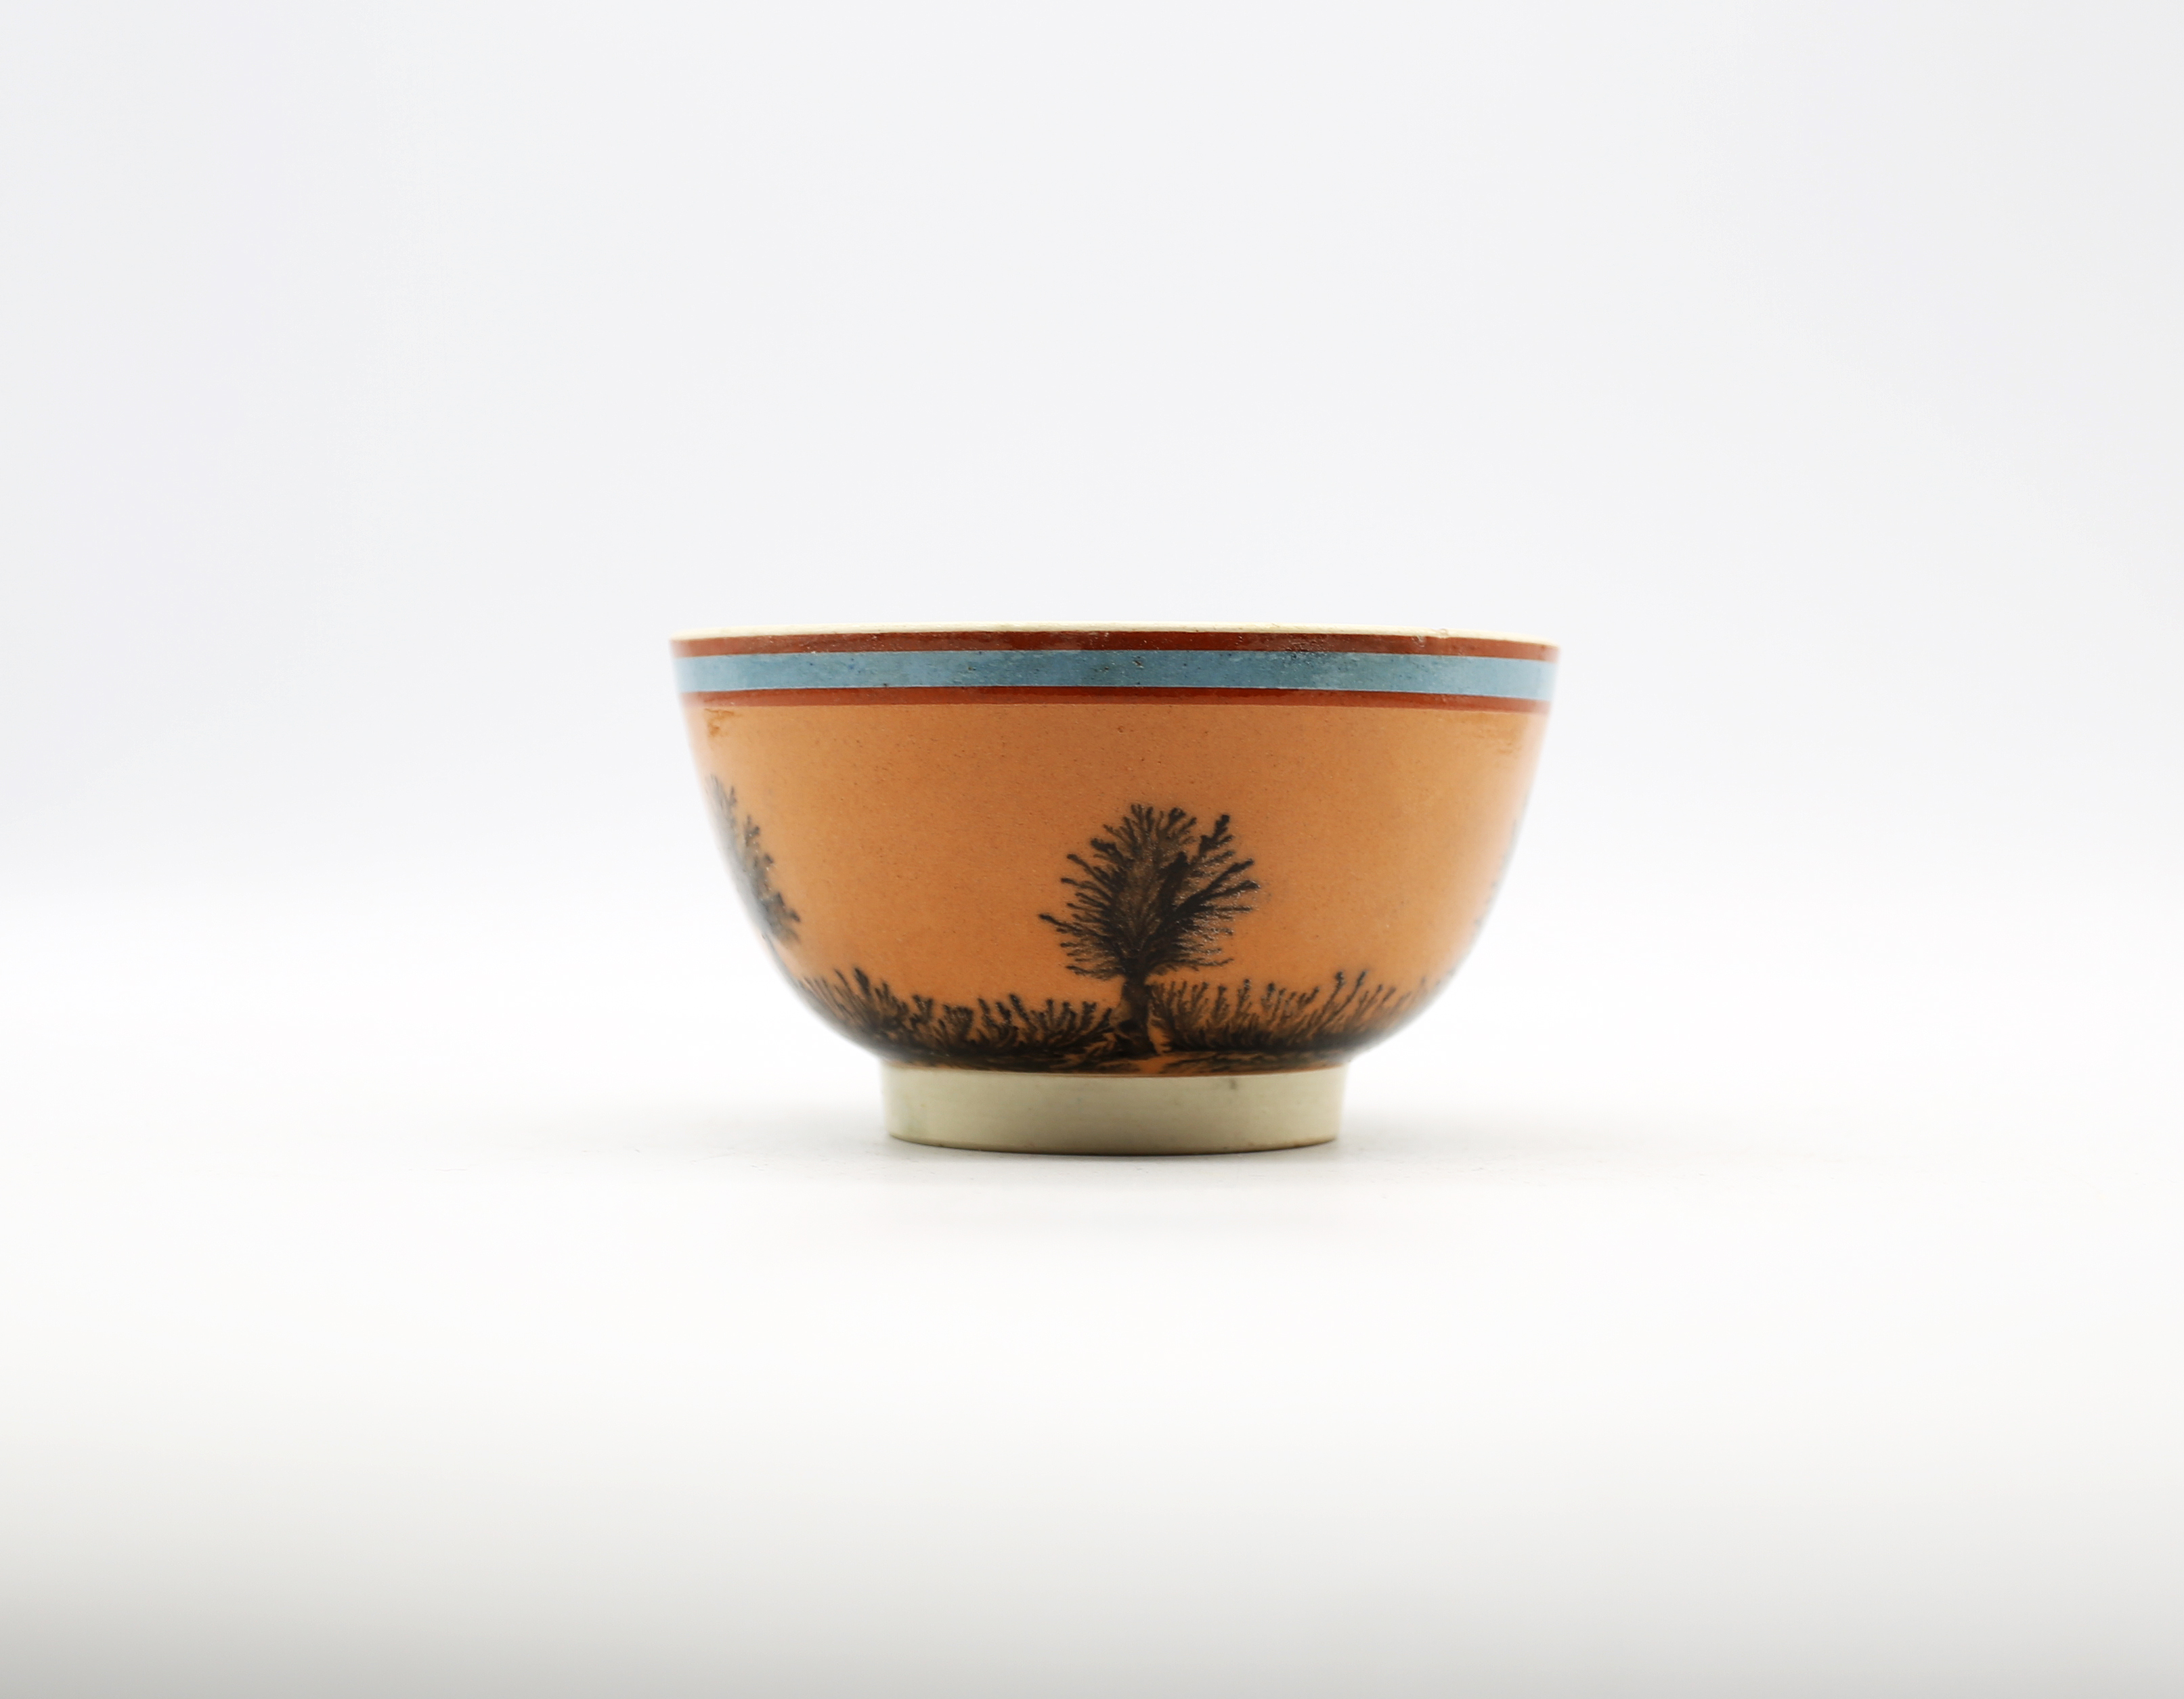 A small creamware Mocha bowl, orange ground, with black trees and a blue band.  Circa 1800-1820.